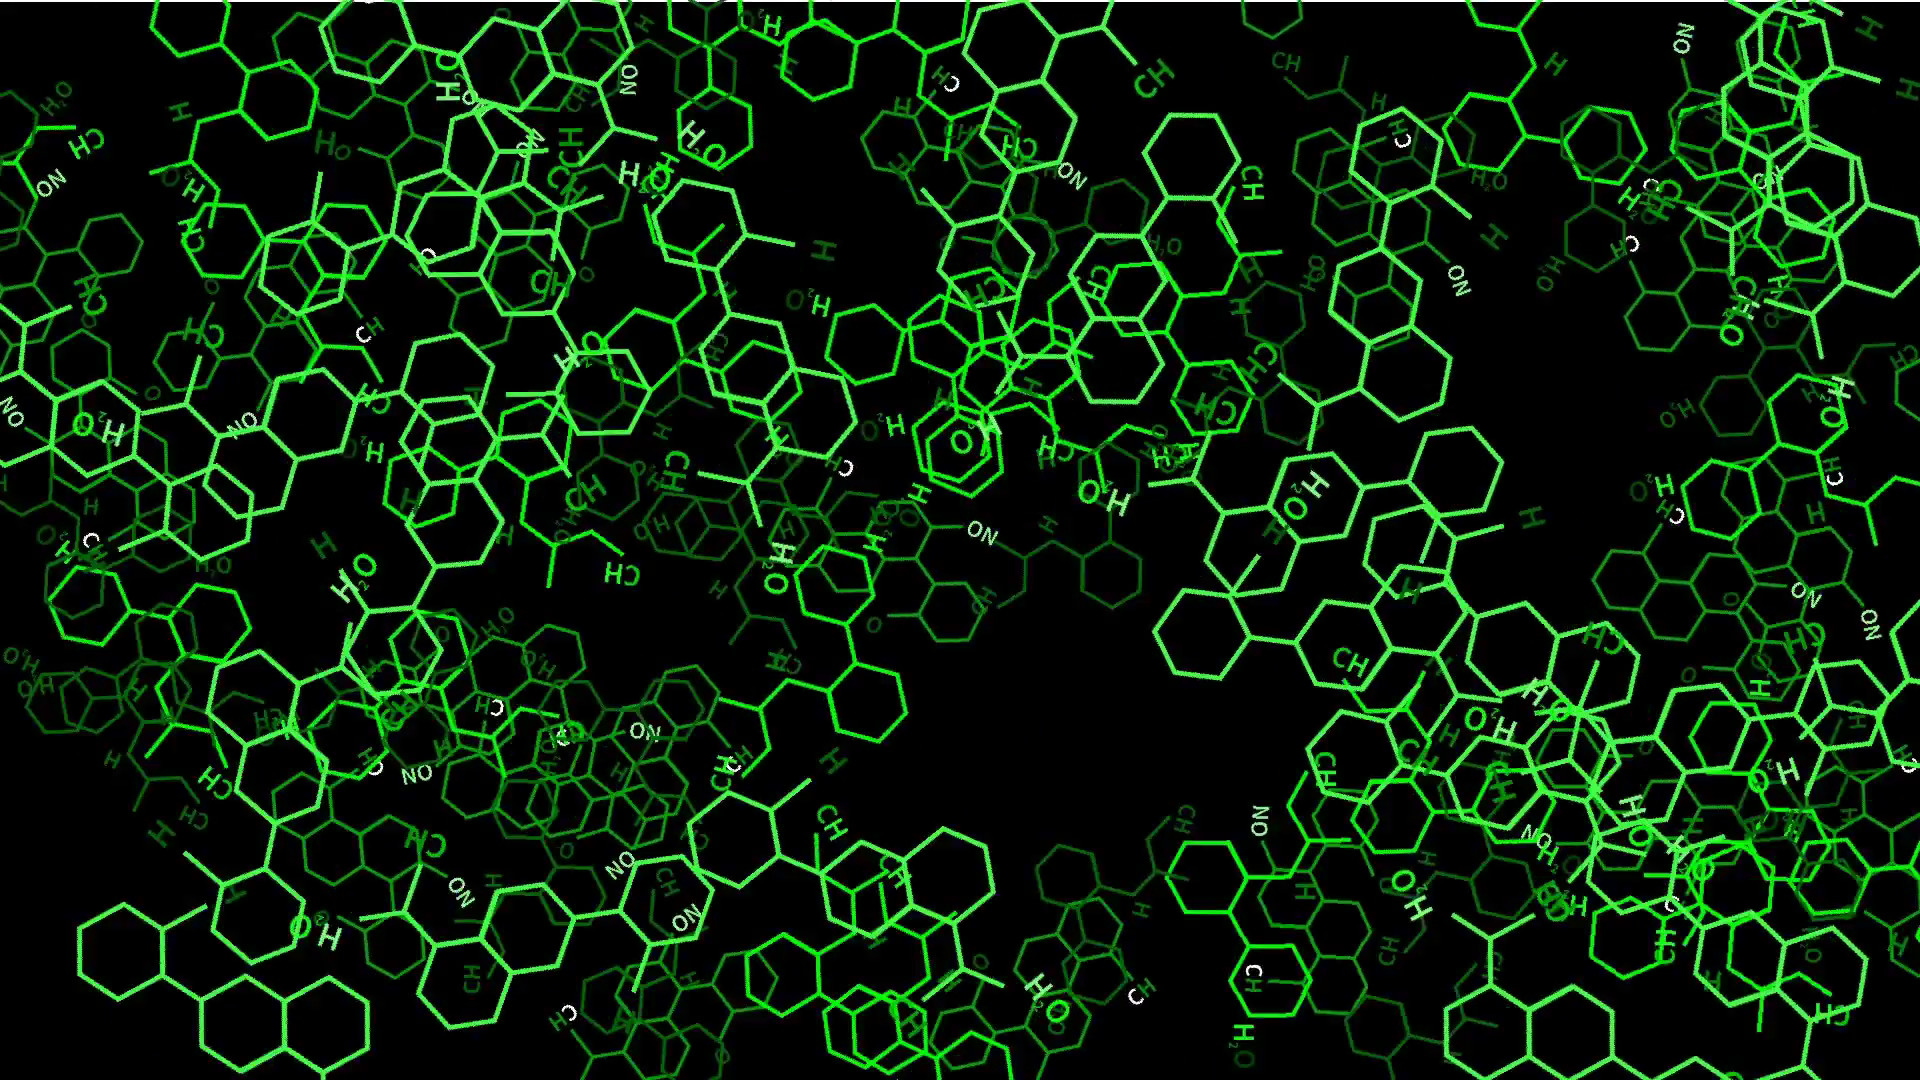 1920x1080 Animation of organic chemistry formulas in green matrix style Motion  Background - Storyblocks Video